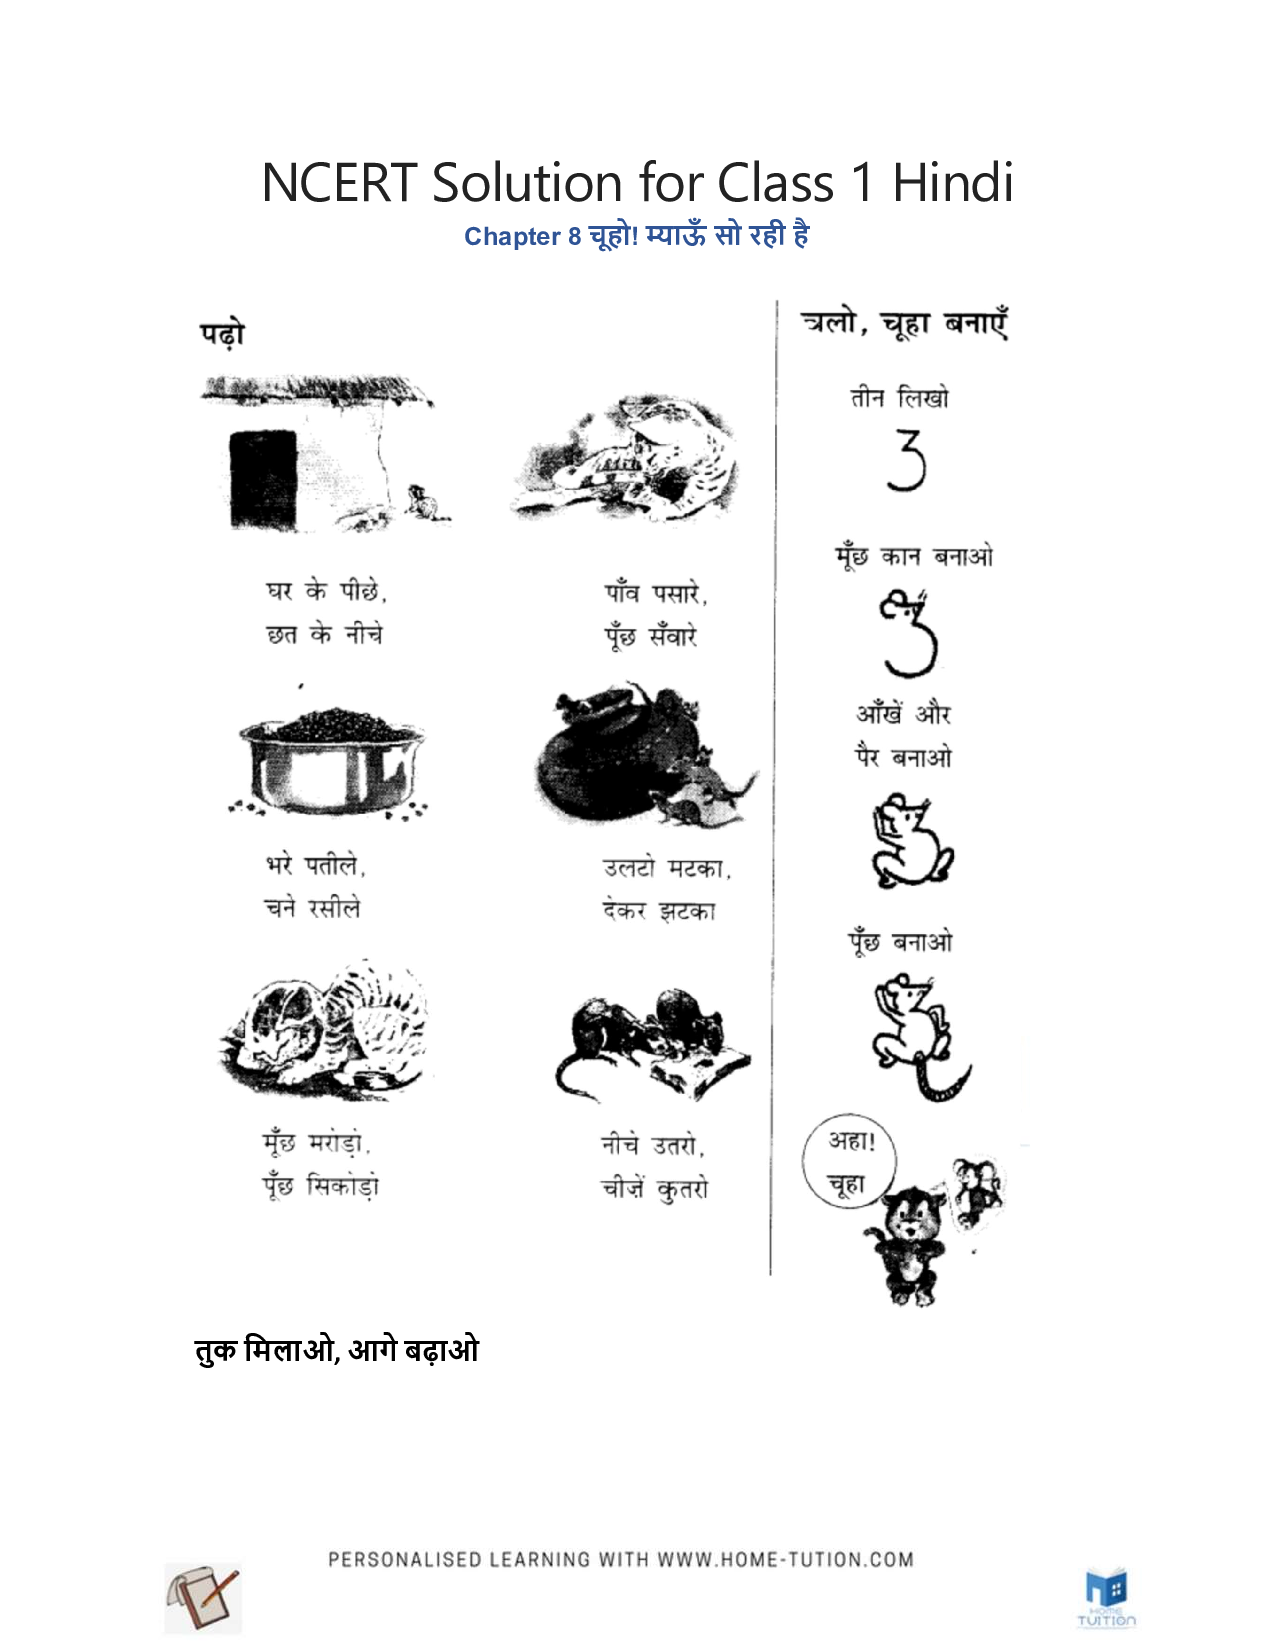 NCERT Solution for Class 1 Hindi Chapter 8 Chouhon Mayon So Rahi Hai(चूहो-म्याऊँ-सो-रही-है)